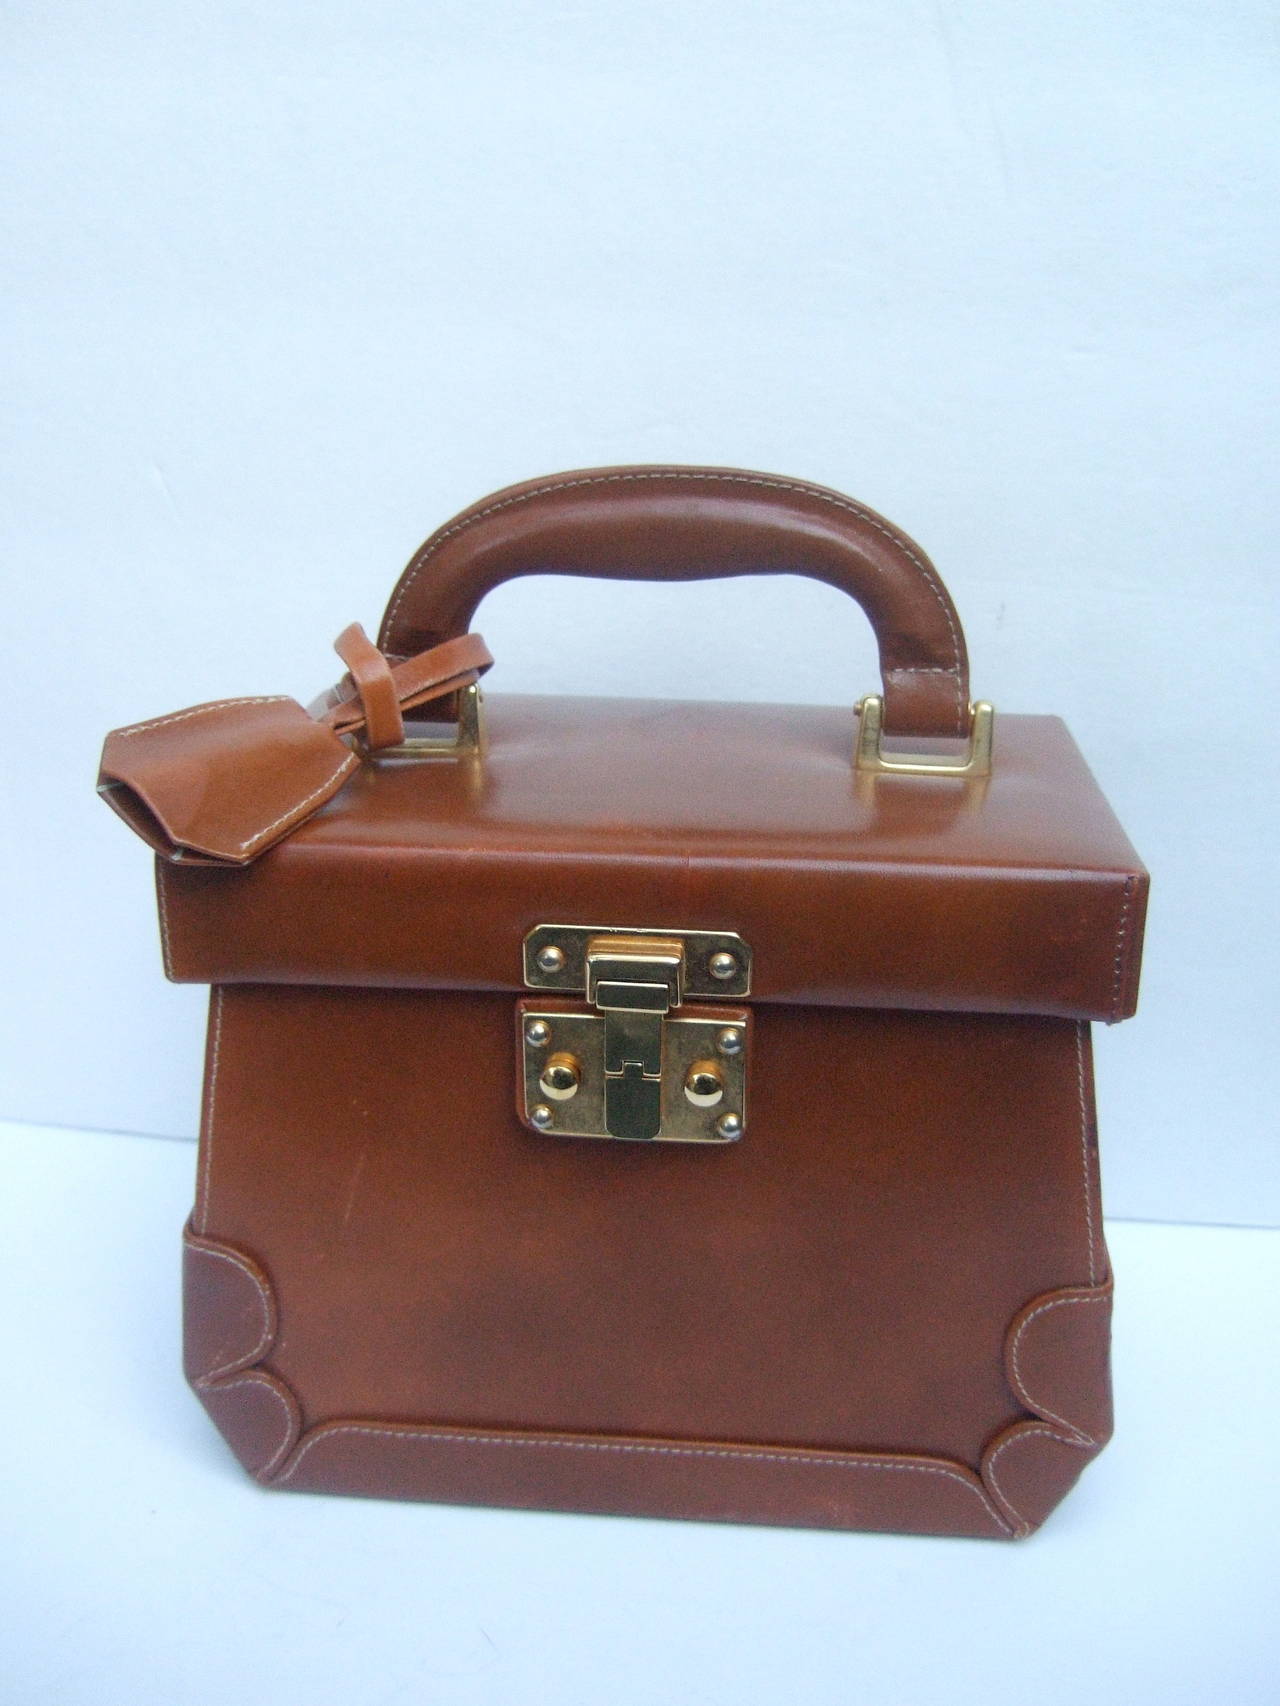 Women's Henri Bendel Caramel Brown Leather Train Case Handbag Made in Italy